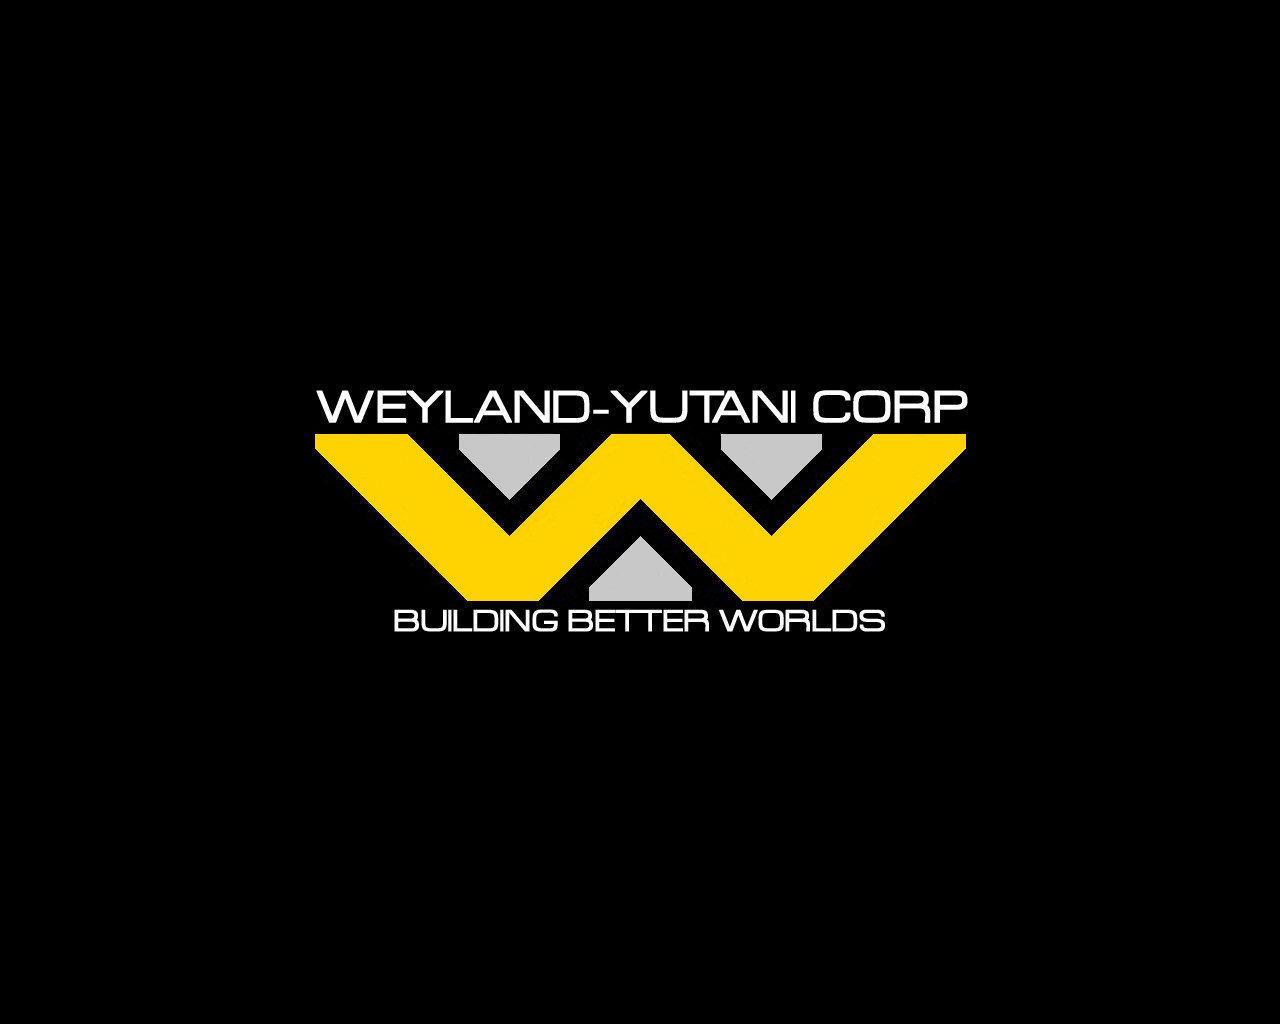 General 1280x1024 science fiction logo Weyland-Yutani Corporation movies simple background